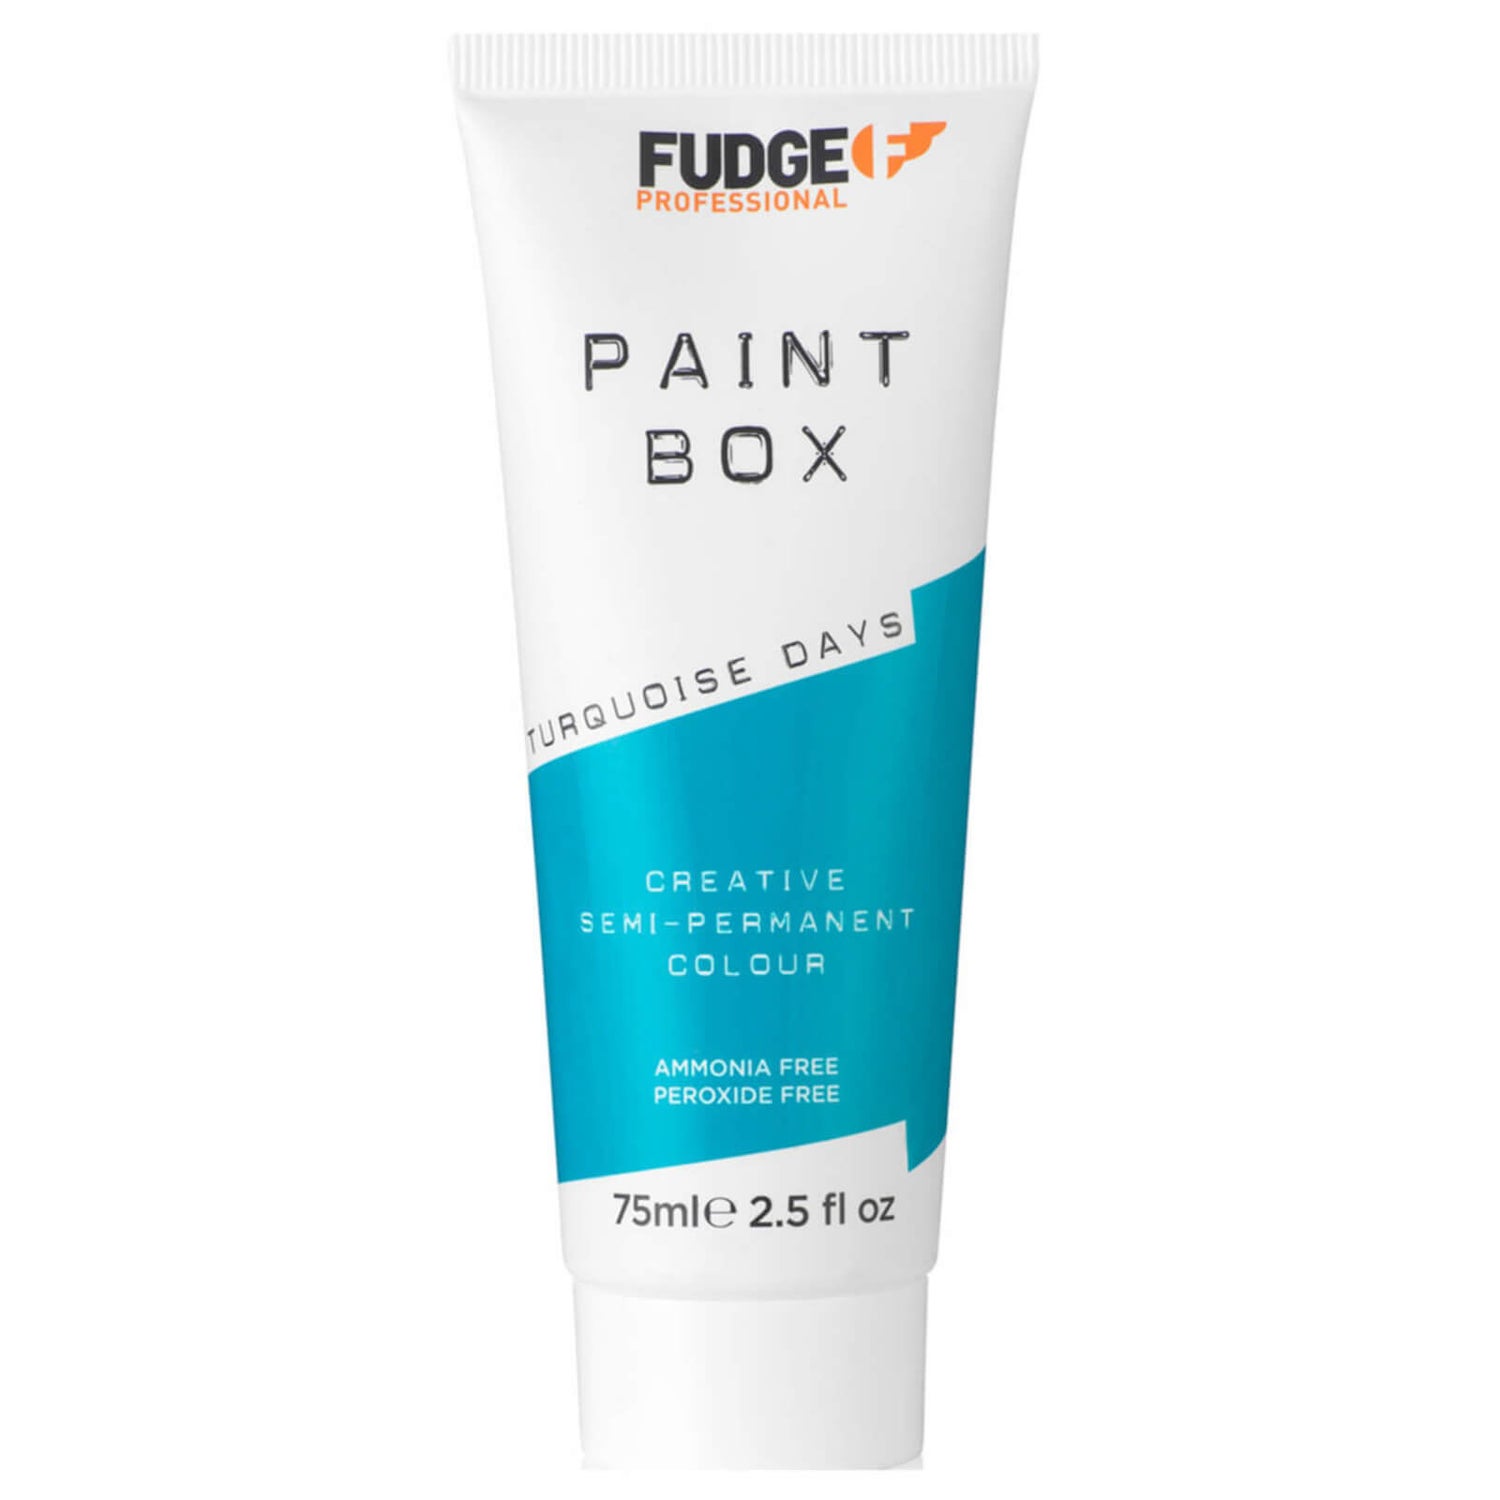 Fudge Paintbox Hair Colourant 75ml - Turquoise Days